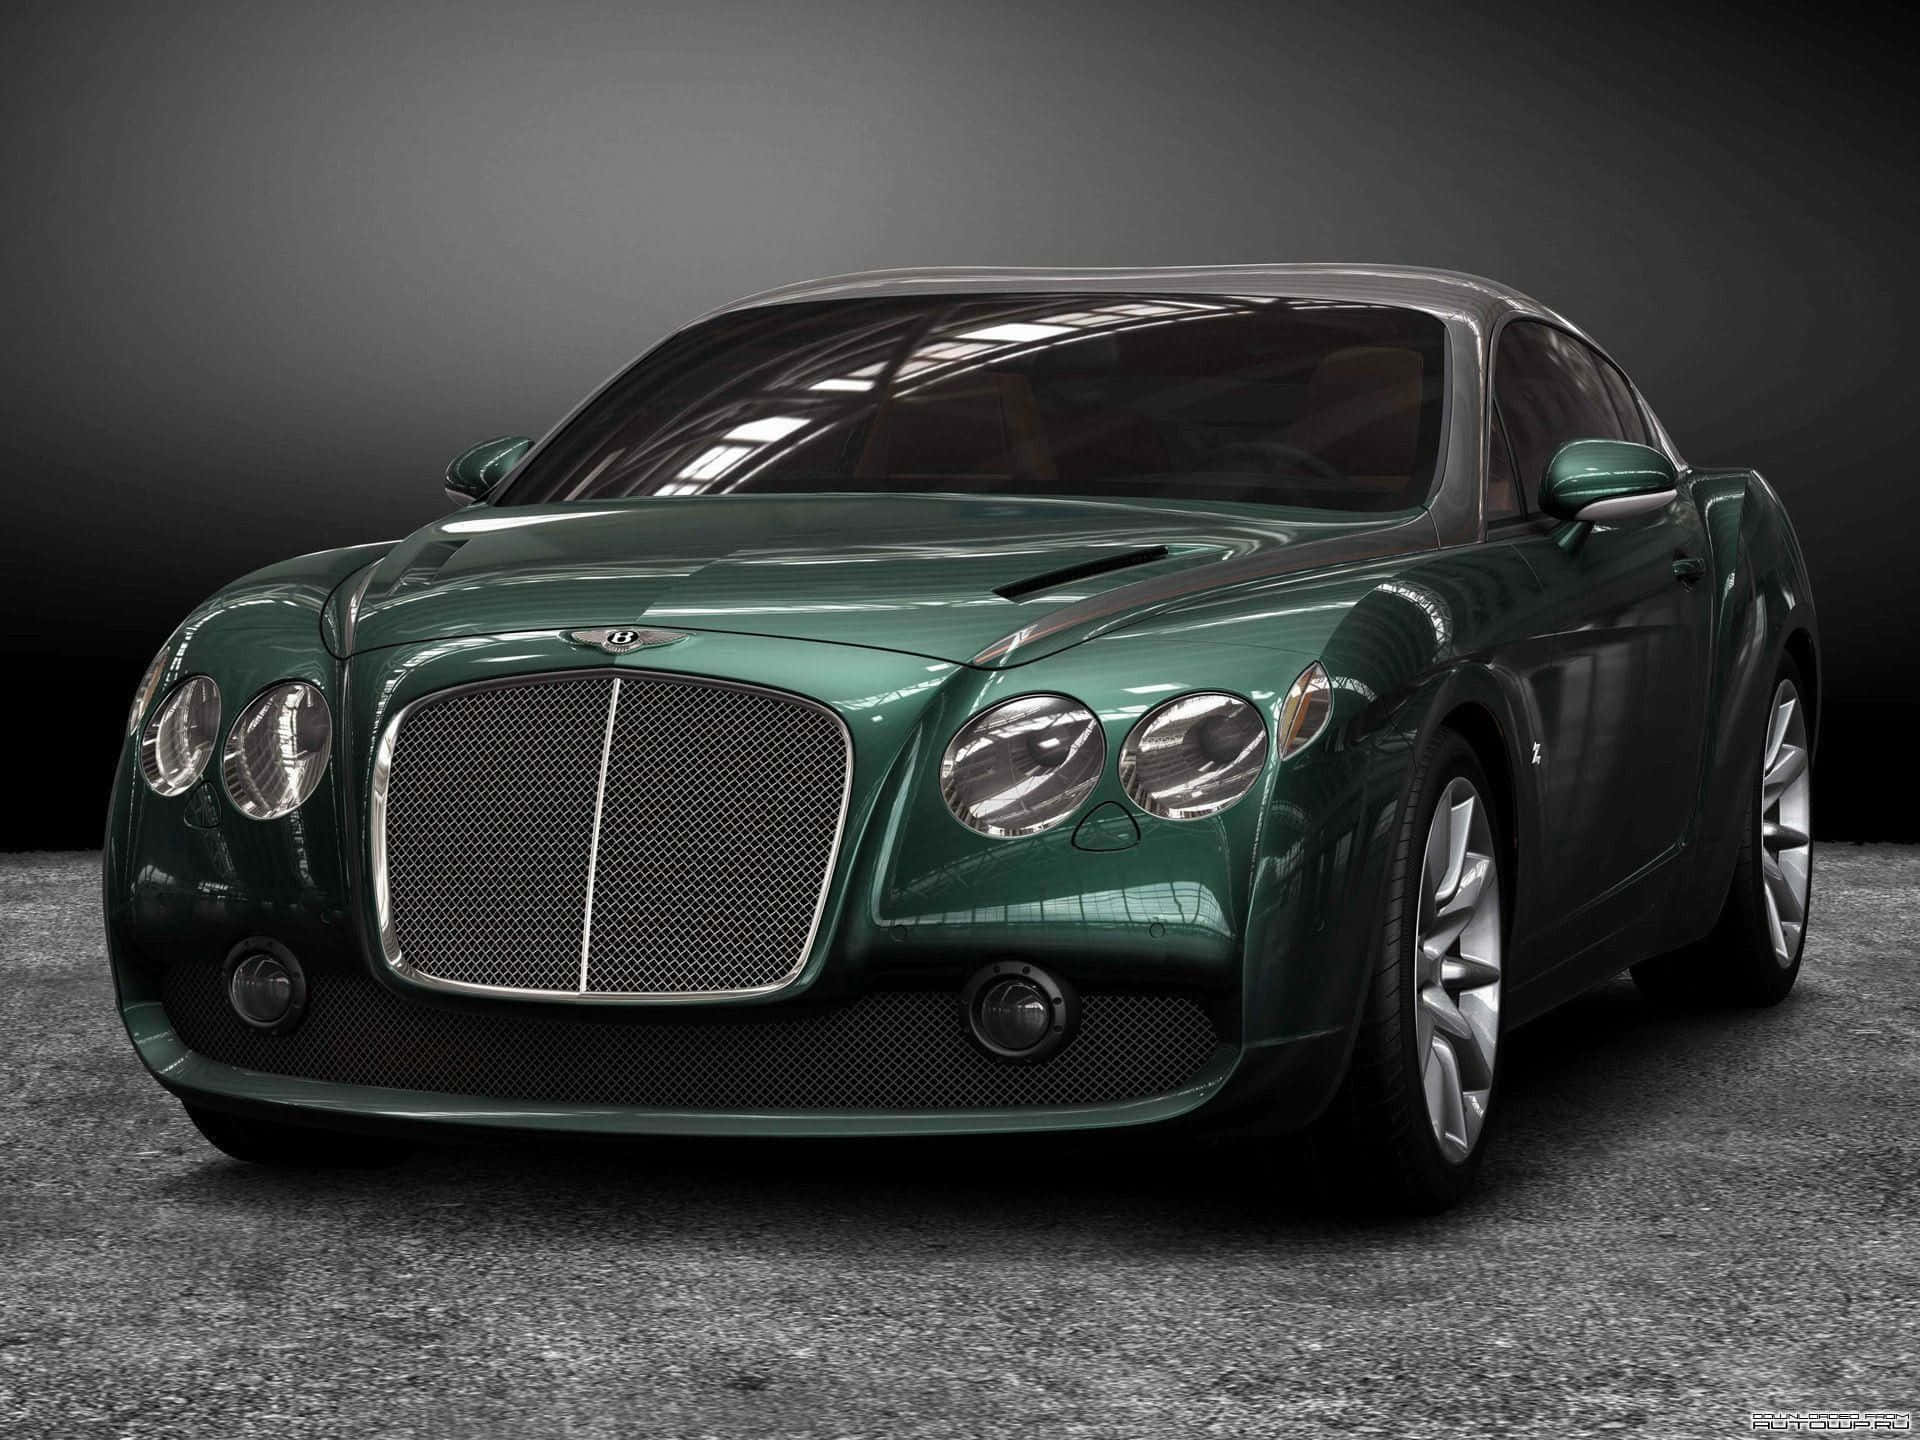 Luxury Bentley rides into the future